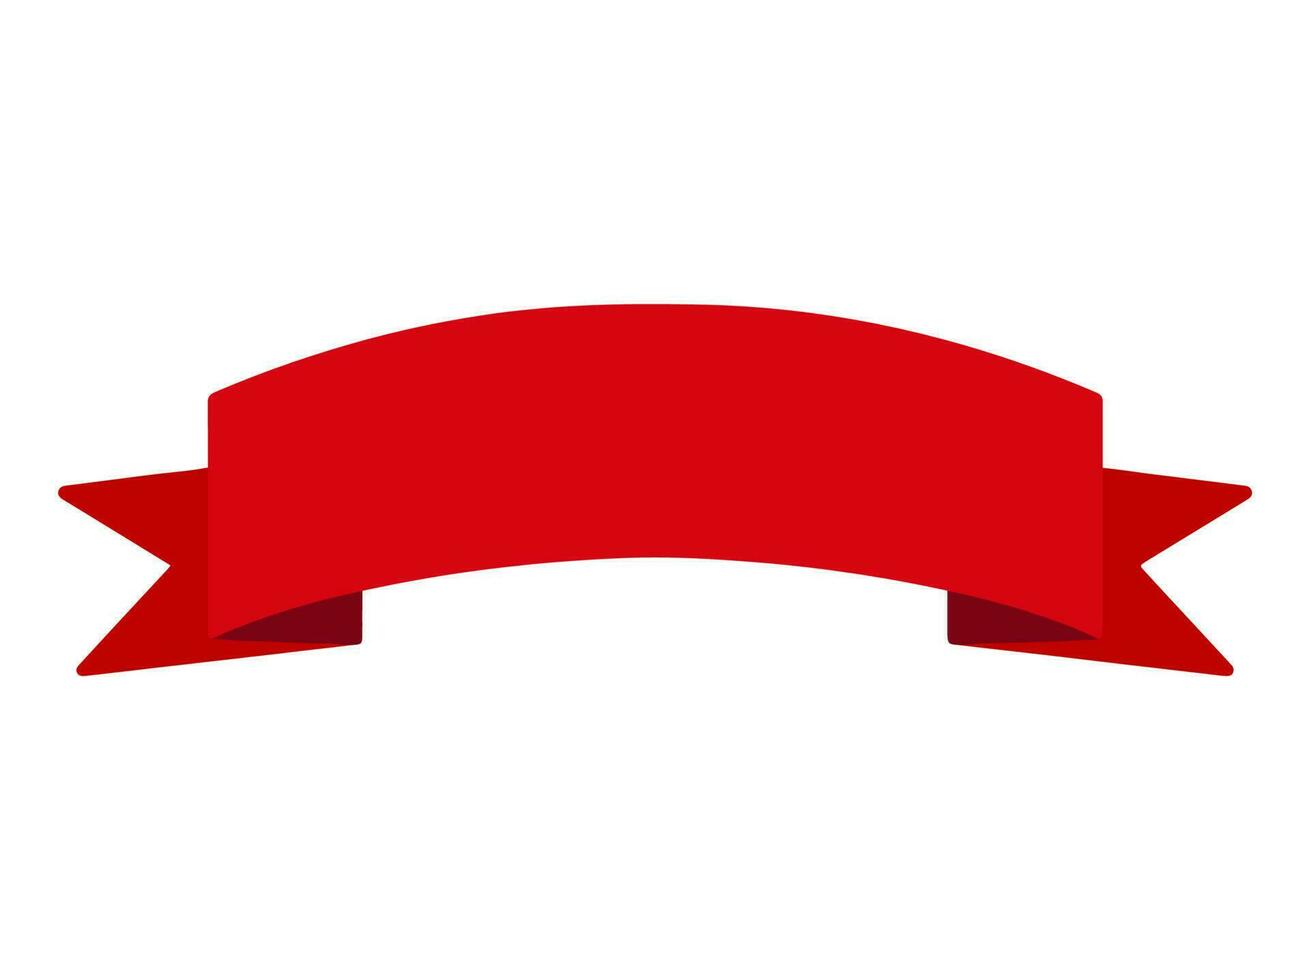 Retro Ribbon Banner red color vector